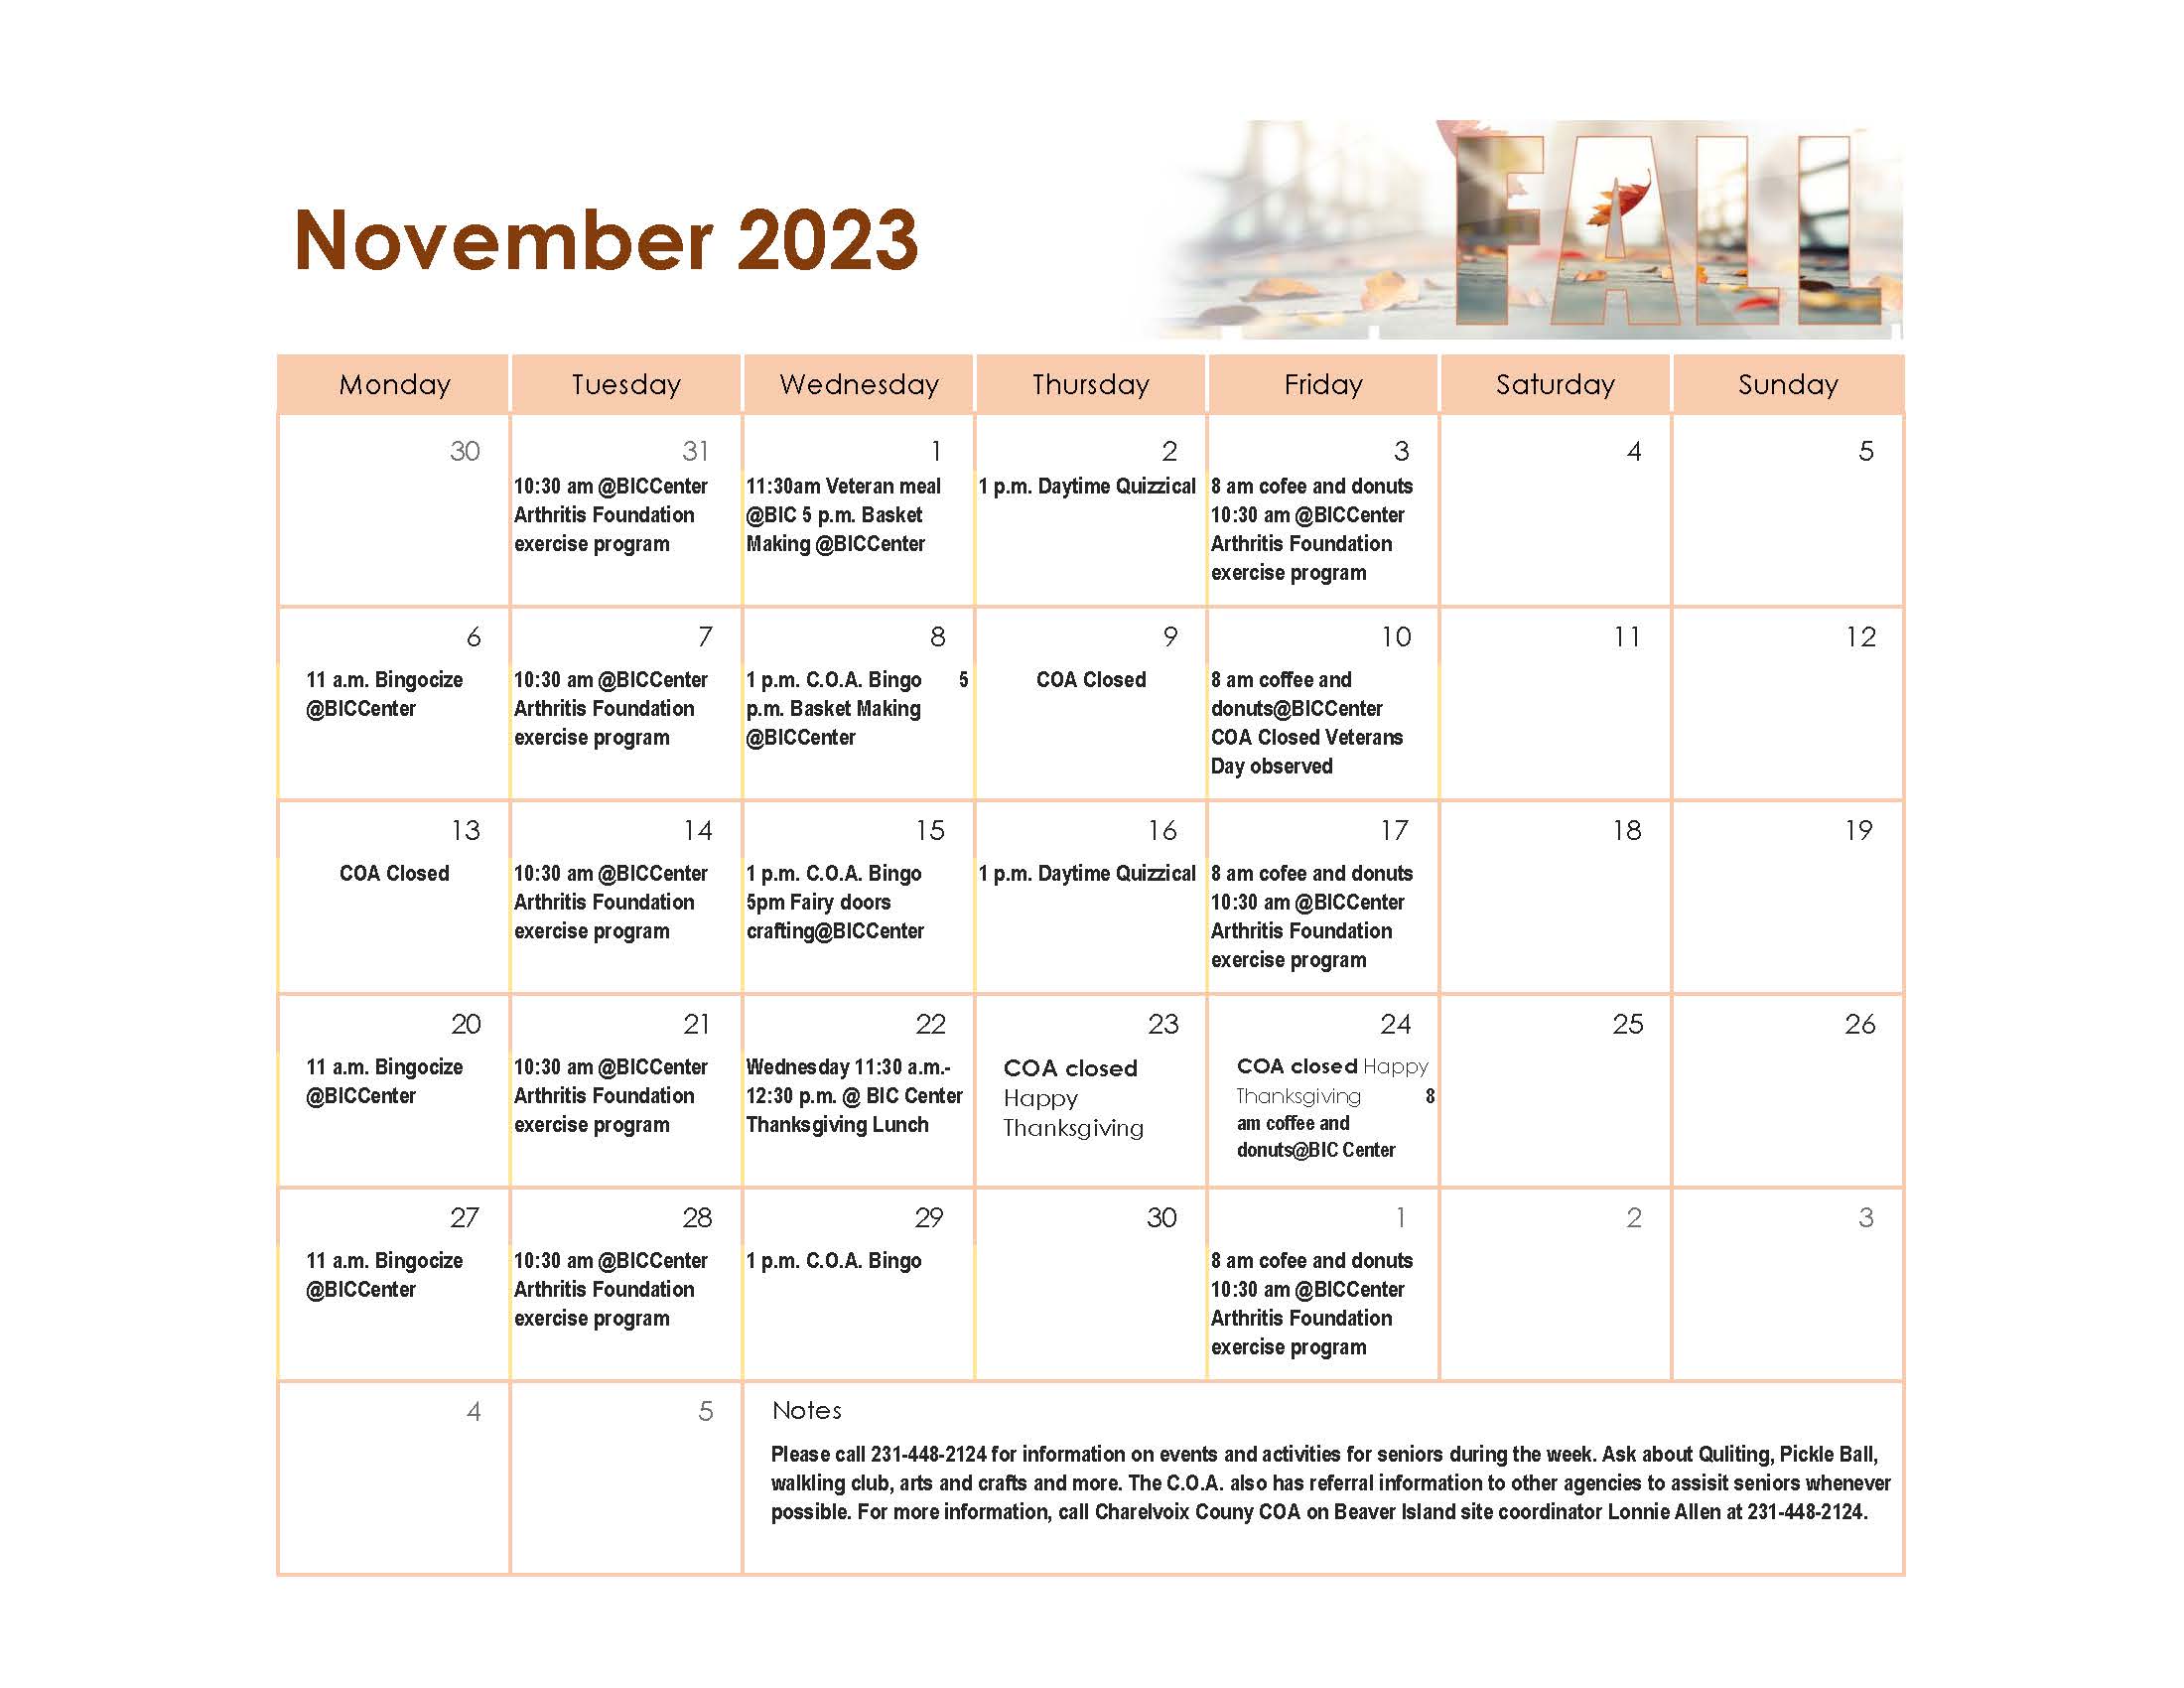 November 2023 Calendar.jpg